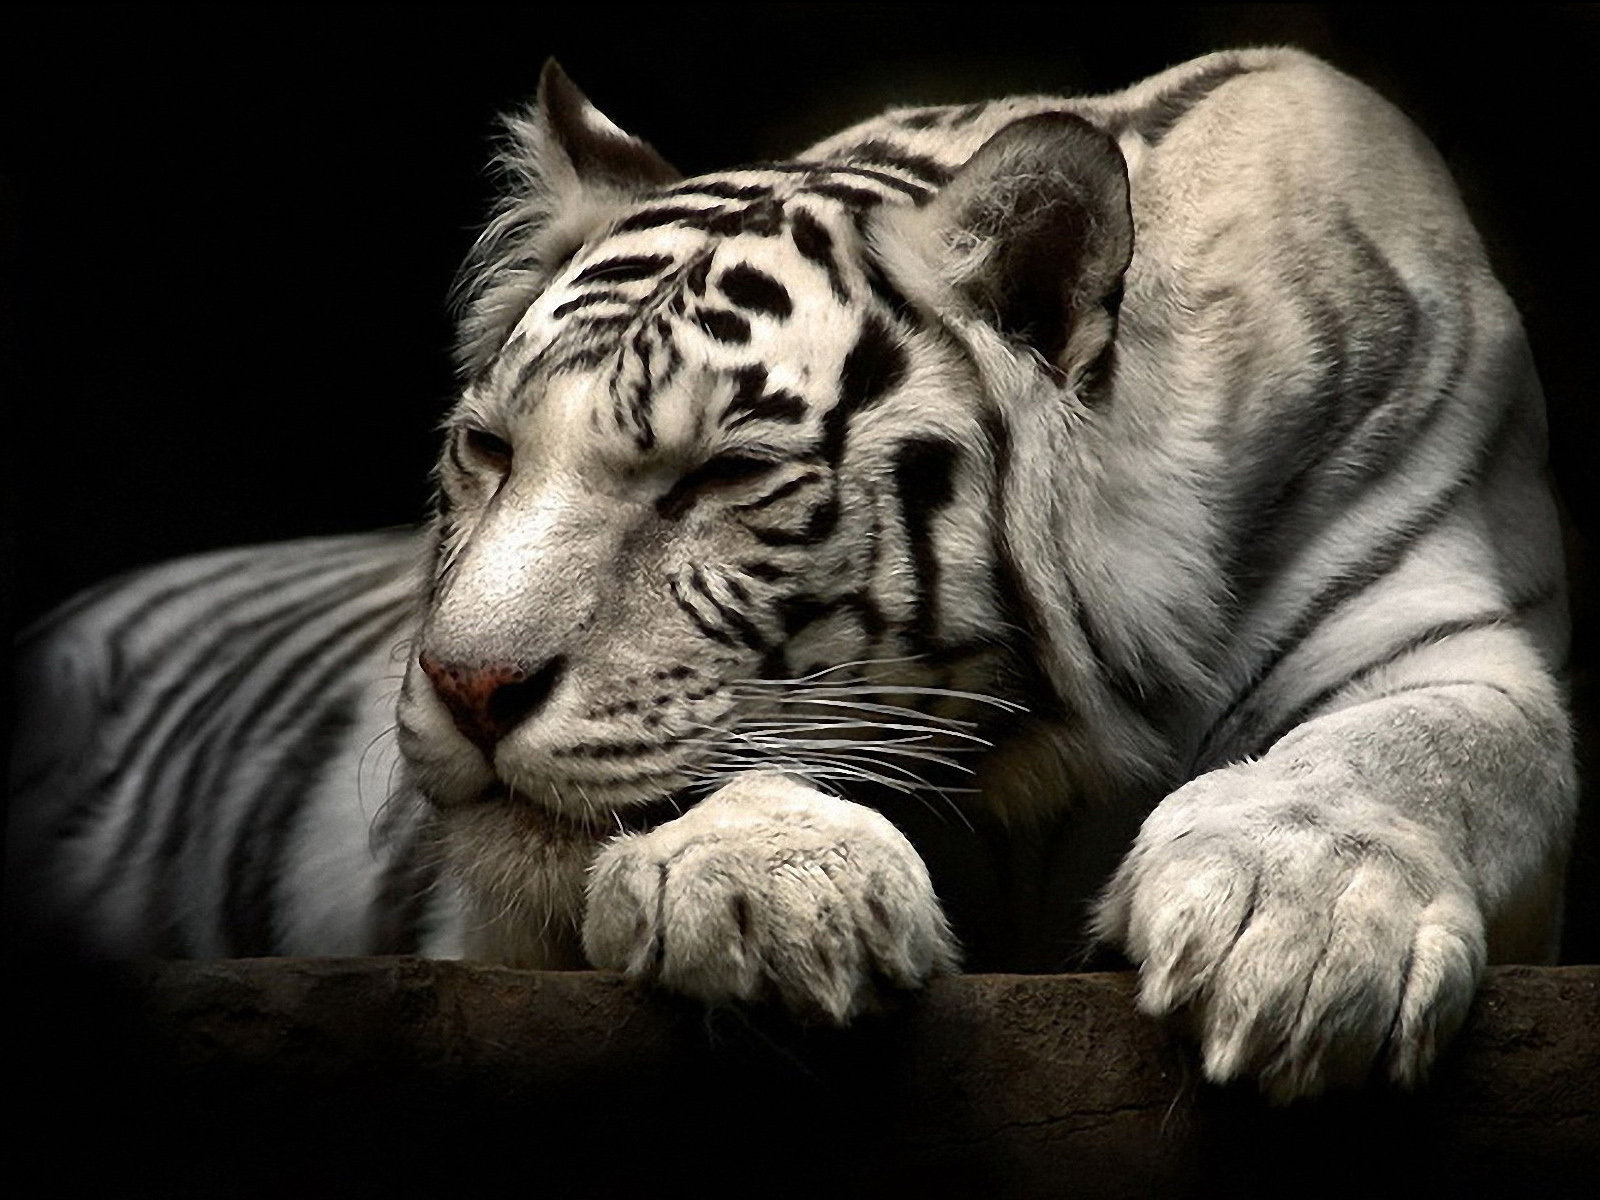 White Tiger wallpaper HD for desktop background